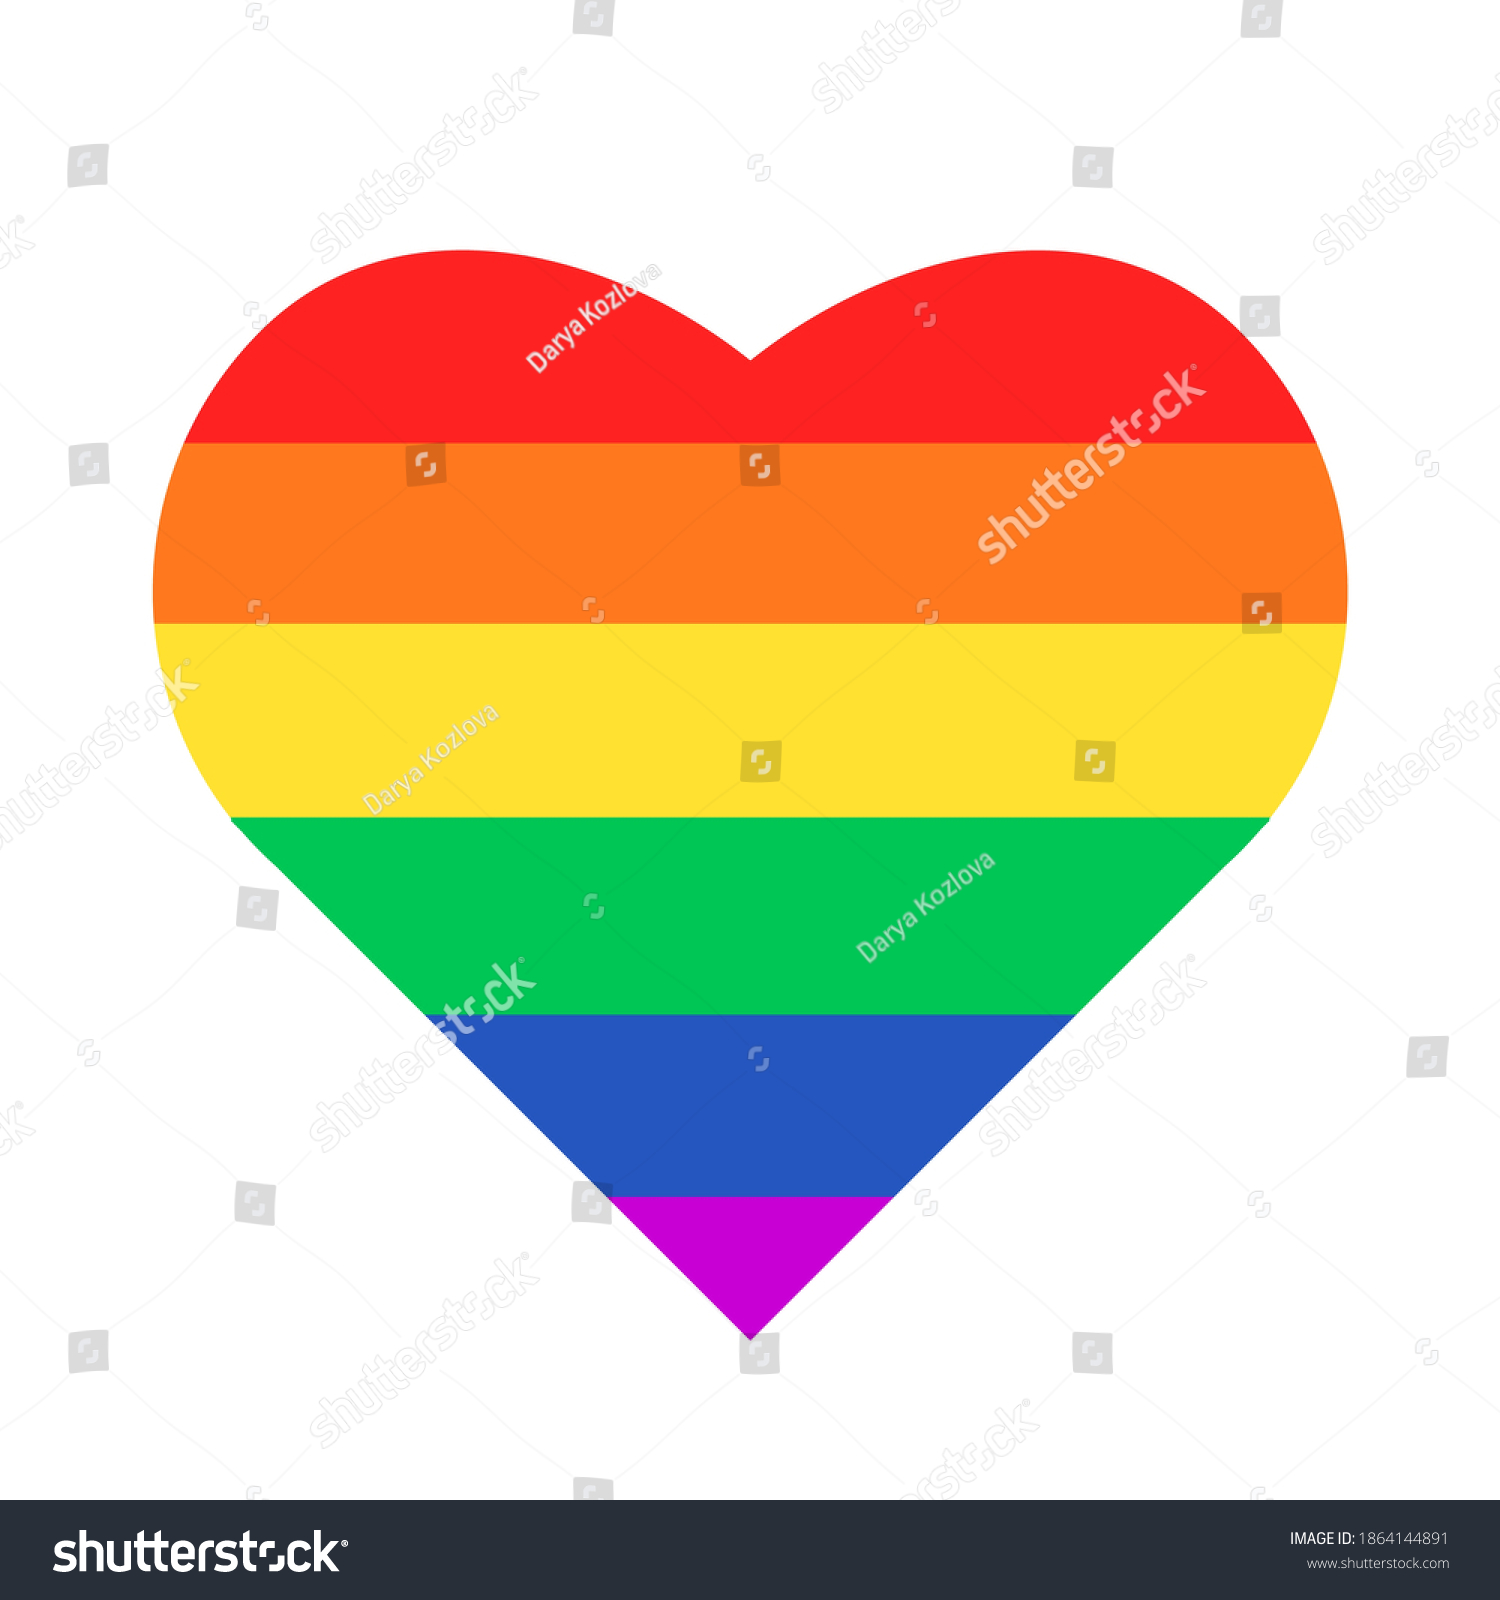 Lgbt Movement Pride Flag Heart Rainbow Stock Vector Royalty Free 1864144891 Shutterstock